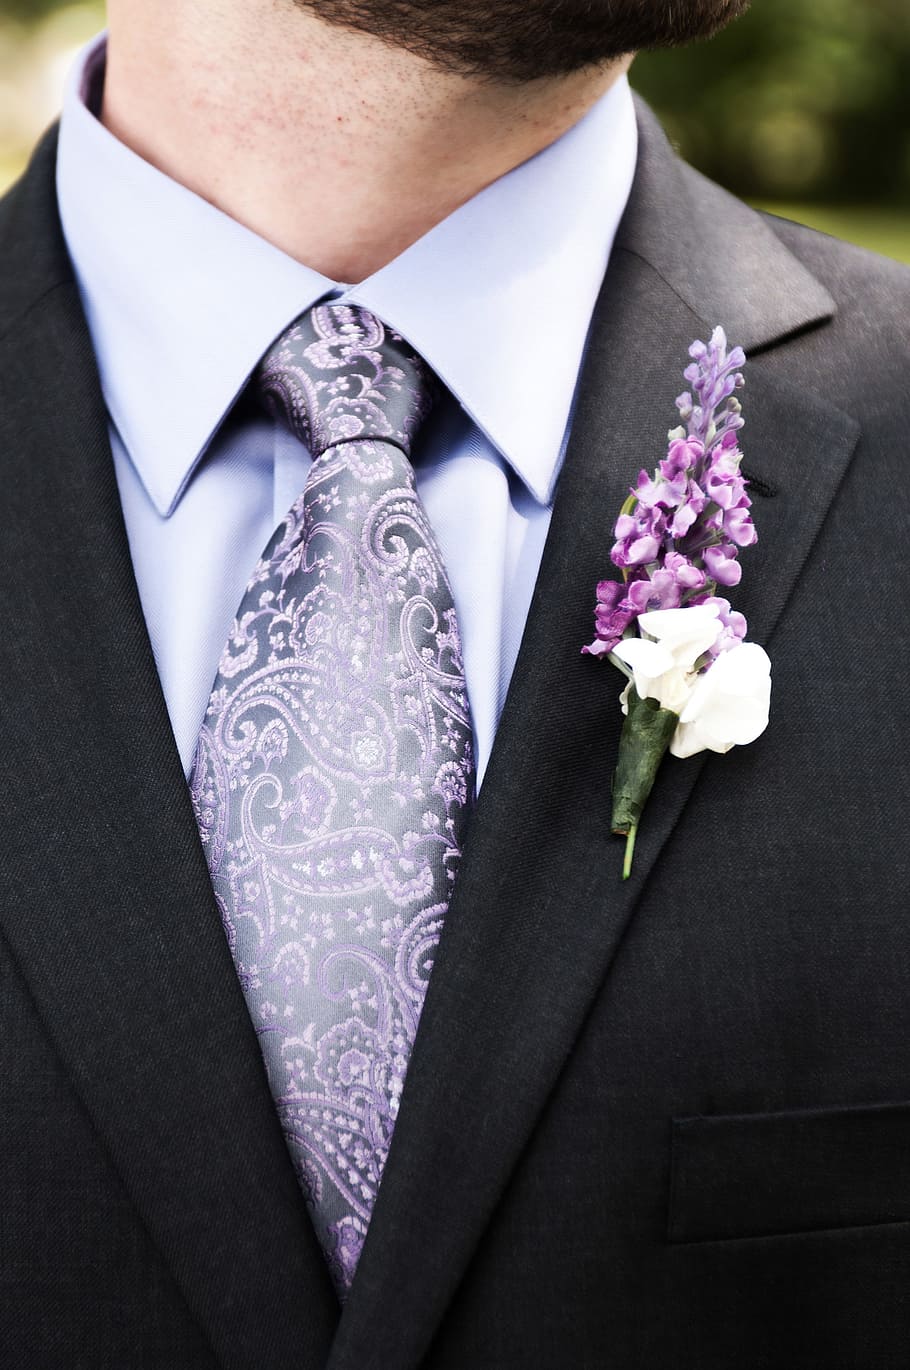 mode, potret, orang, memakai, pria, pengantin pria, dasi, ungu, dewasa, bisnis